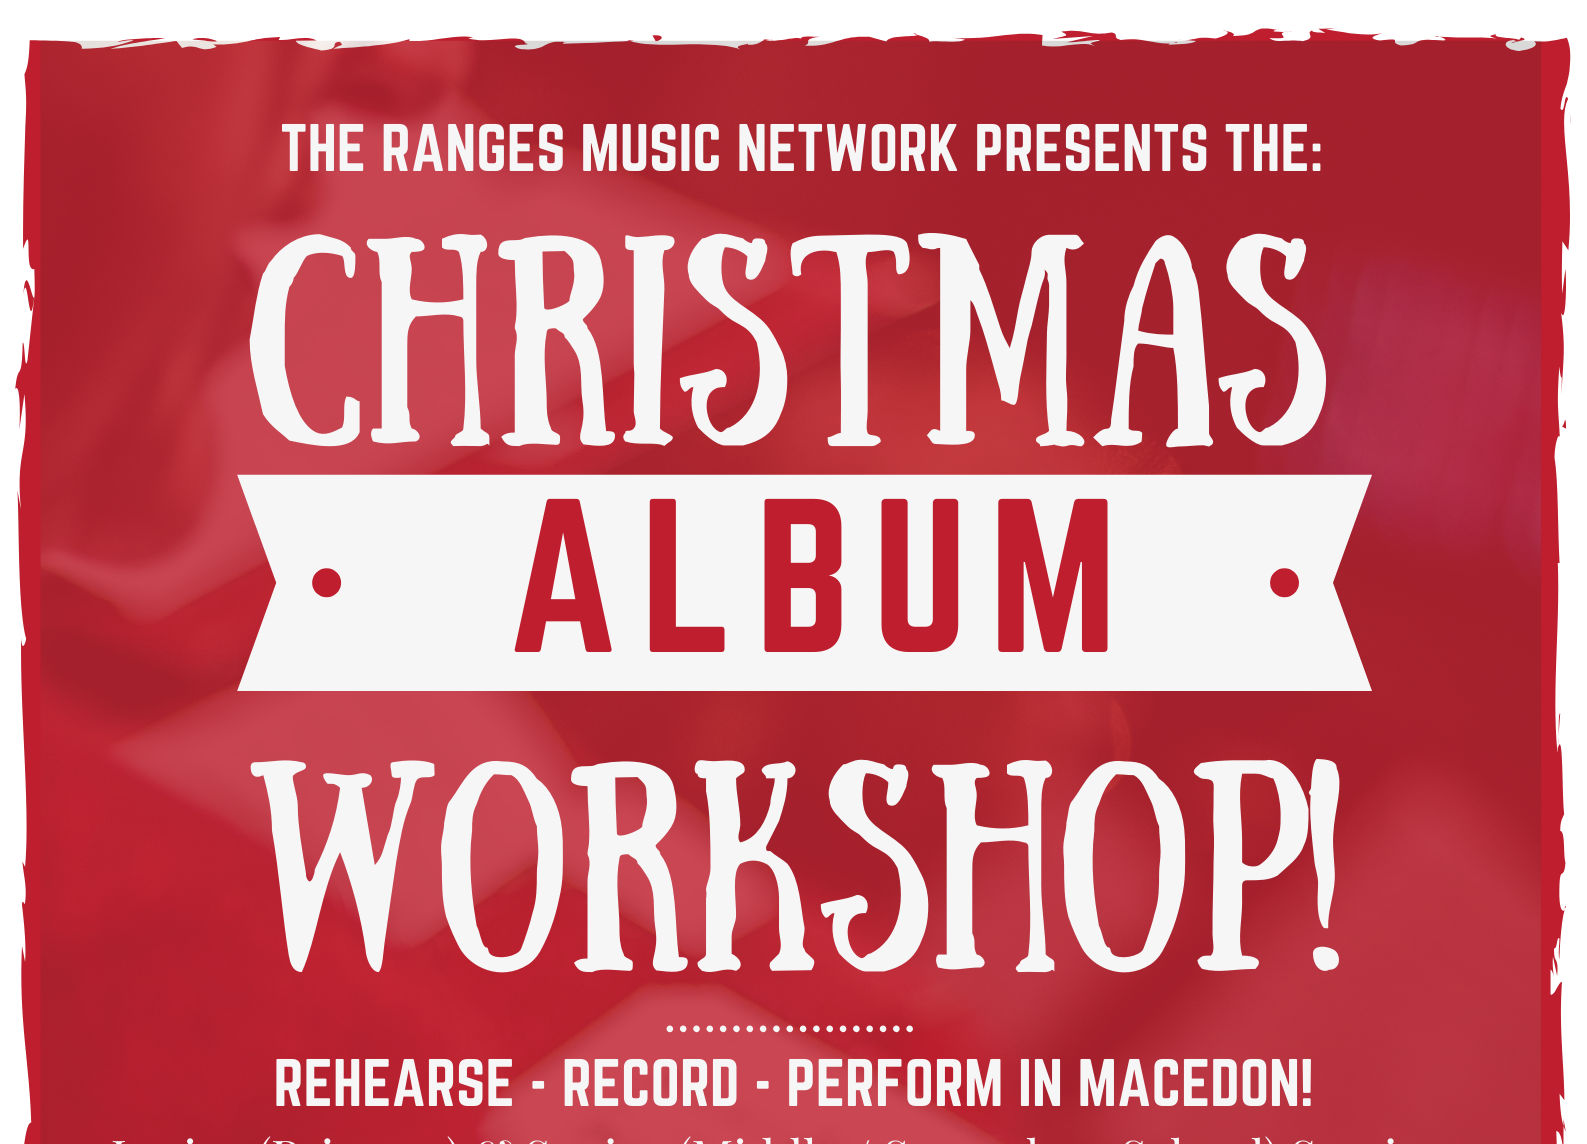 Christmas Album Workshop Poster